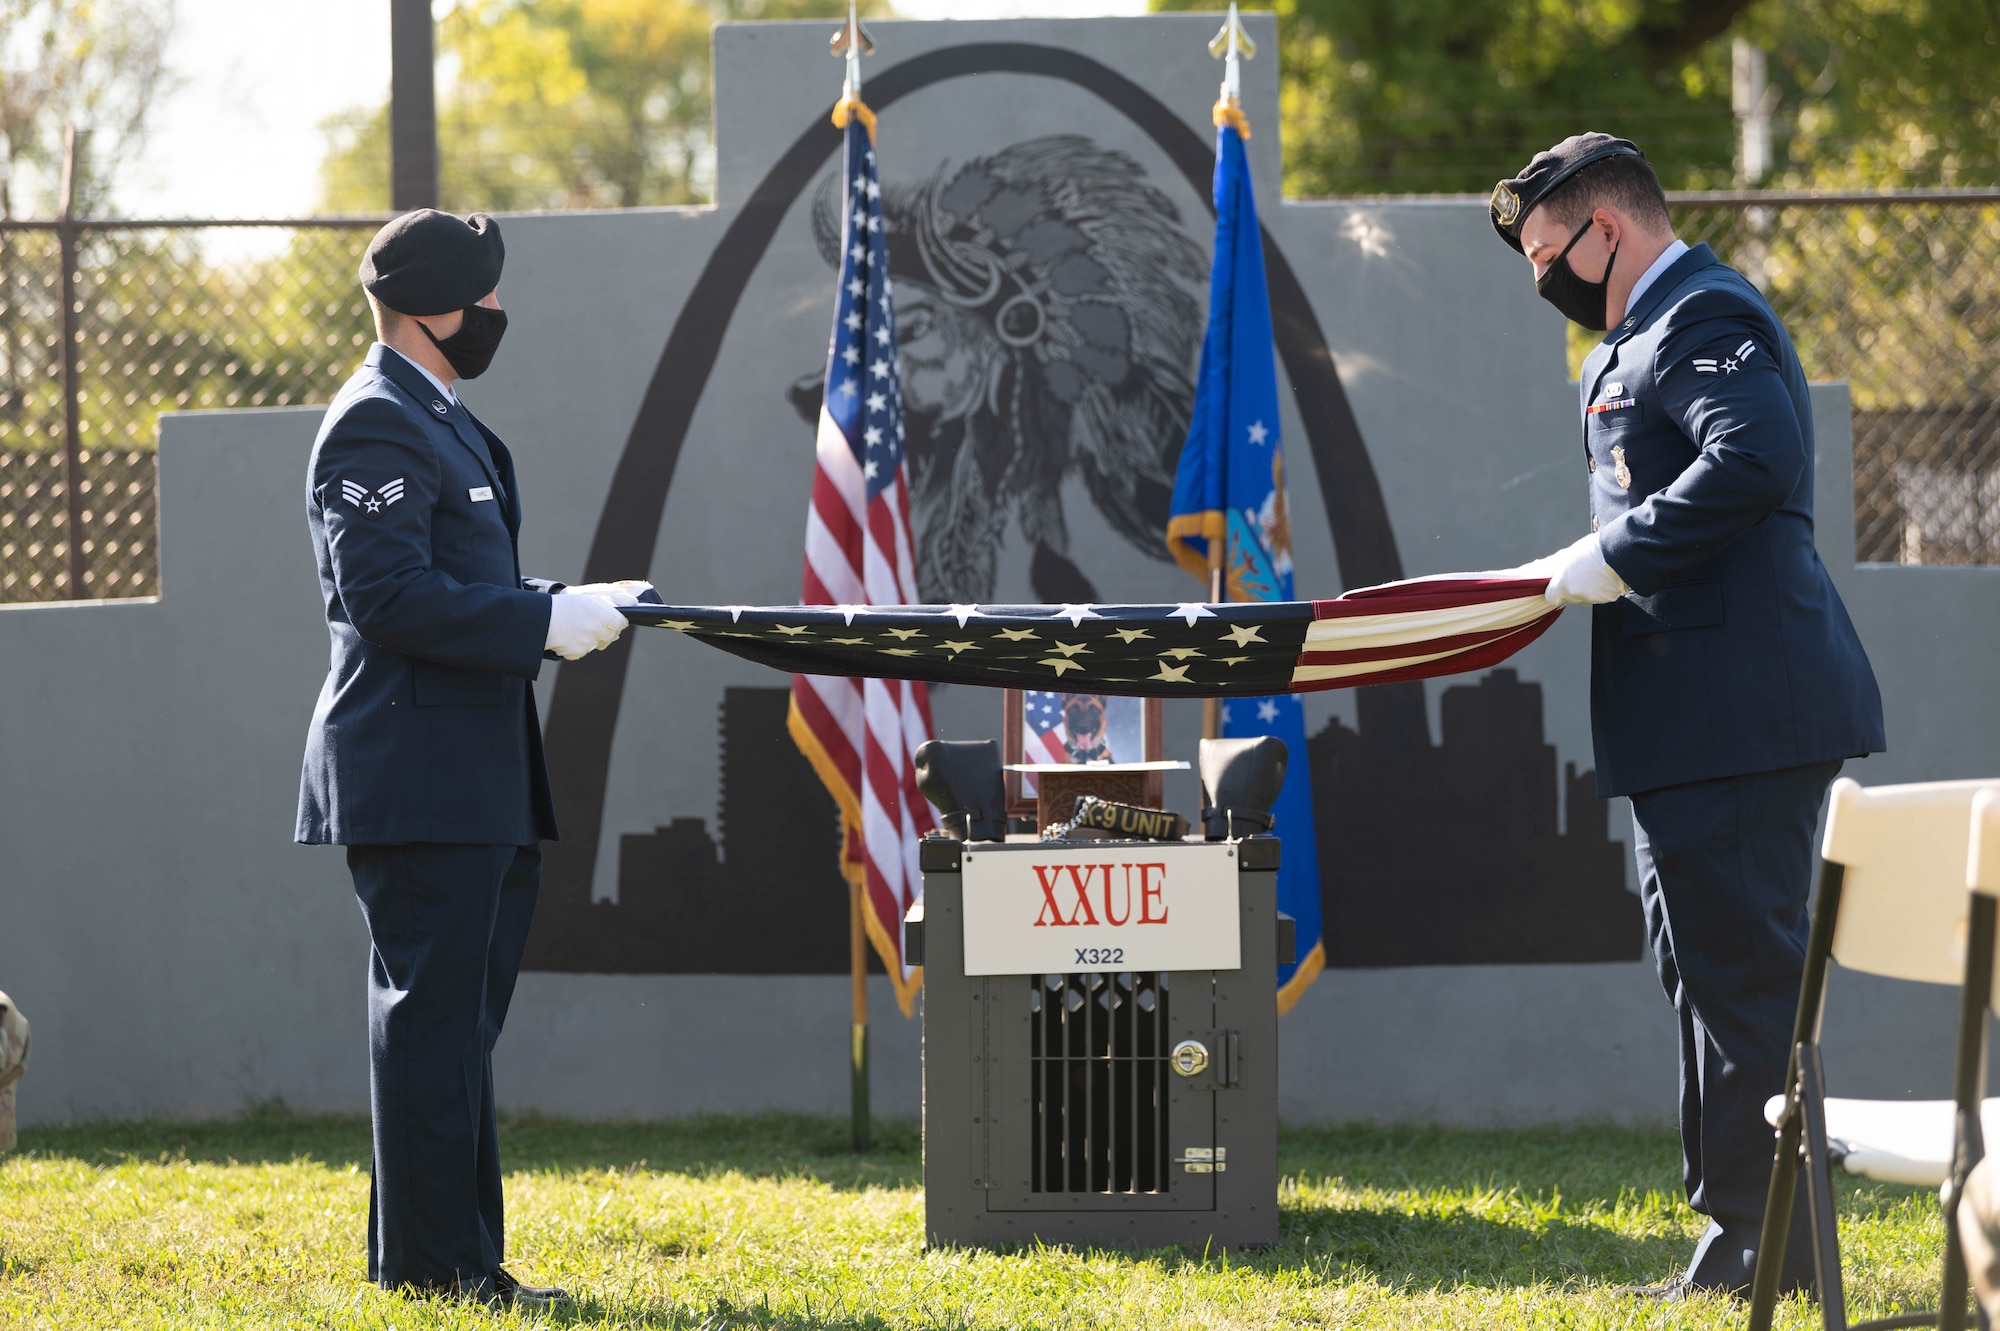 Honor Guard members fold a U.S. flag at a military working dog memorial.